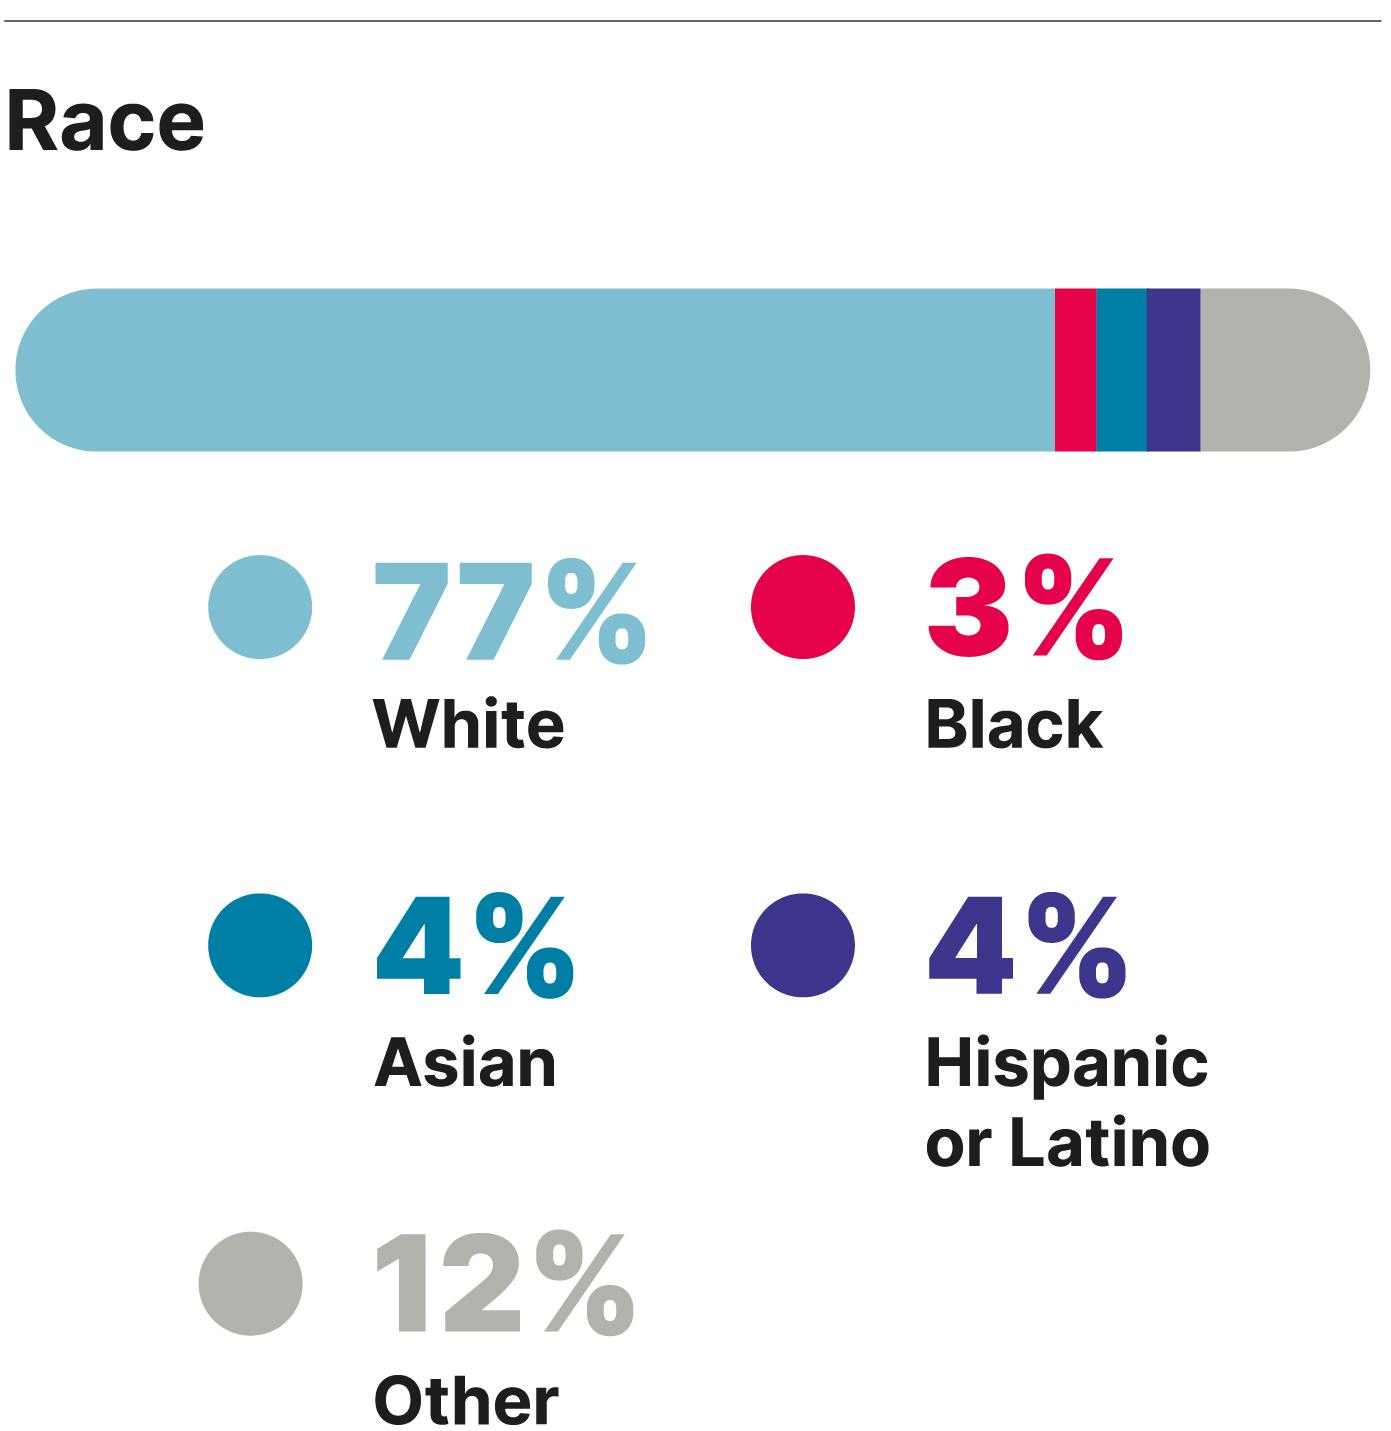 GARNET ECOG performance status and race data infographic